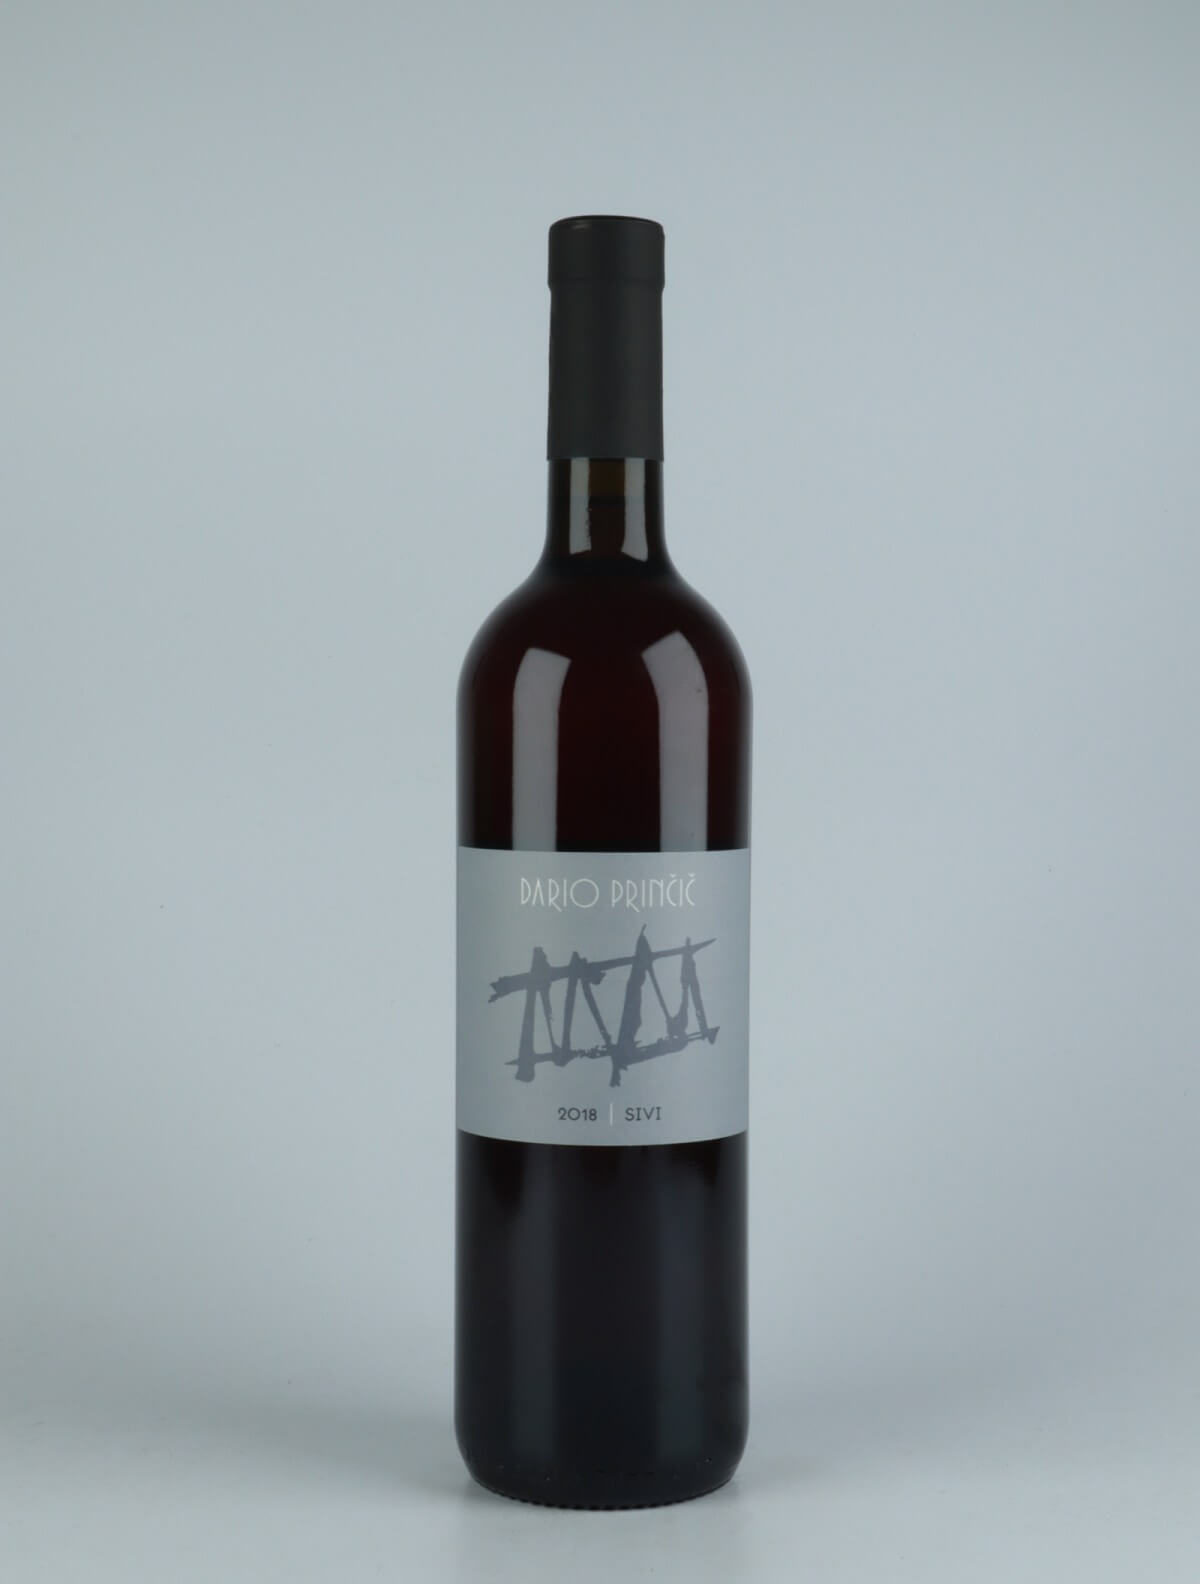 A bottle 2018 Sivi Orange wine from Dario Princic, Friuli in Italy